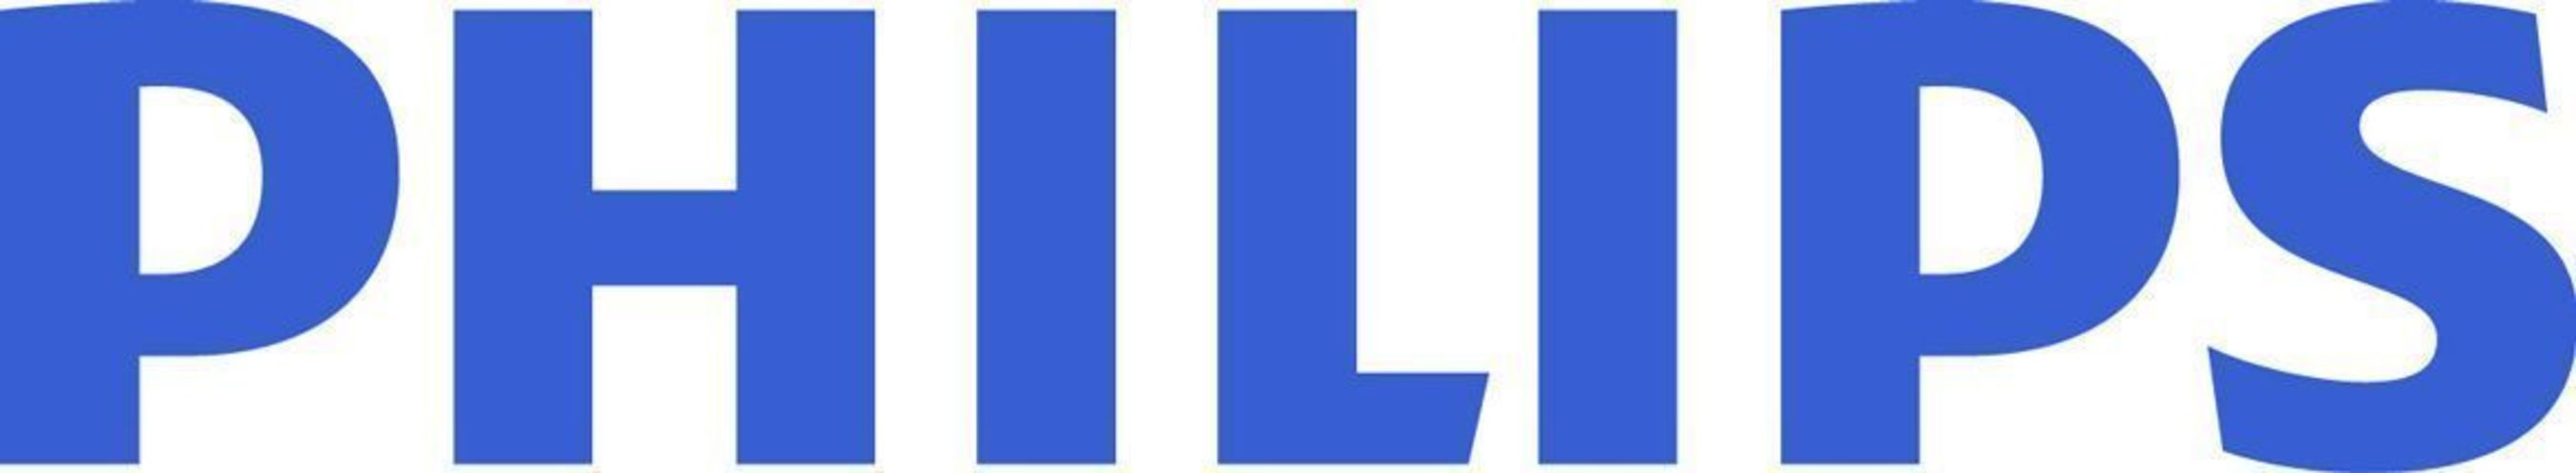 Philips logo (PRNewsFoto/Royal Philips Electronics)